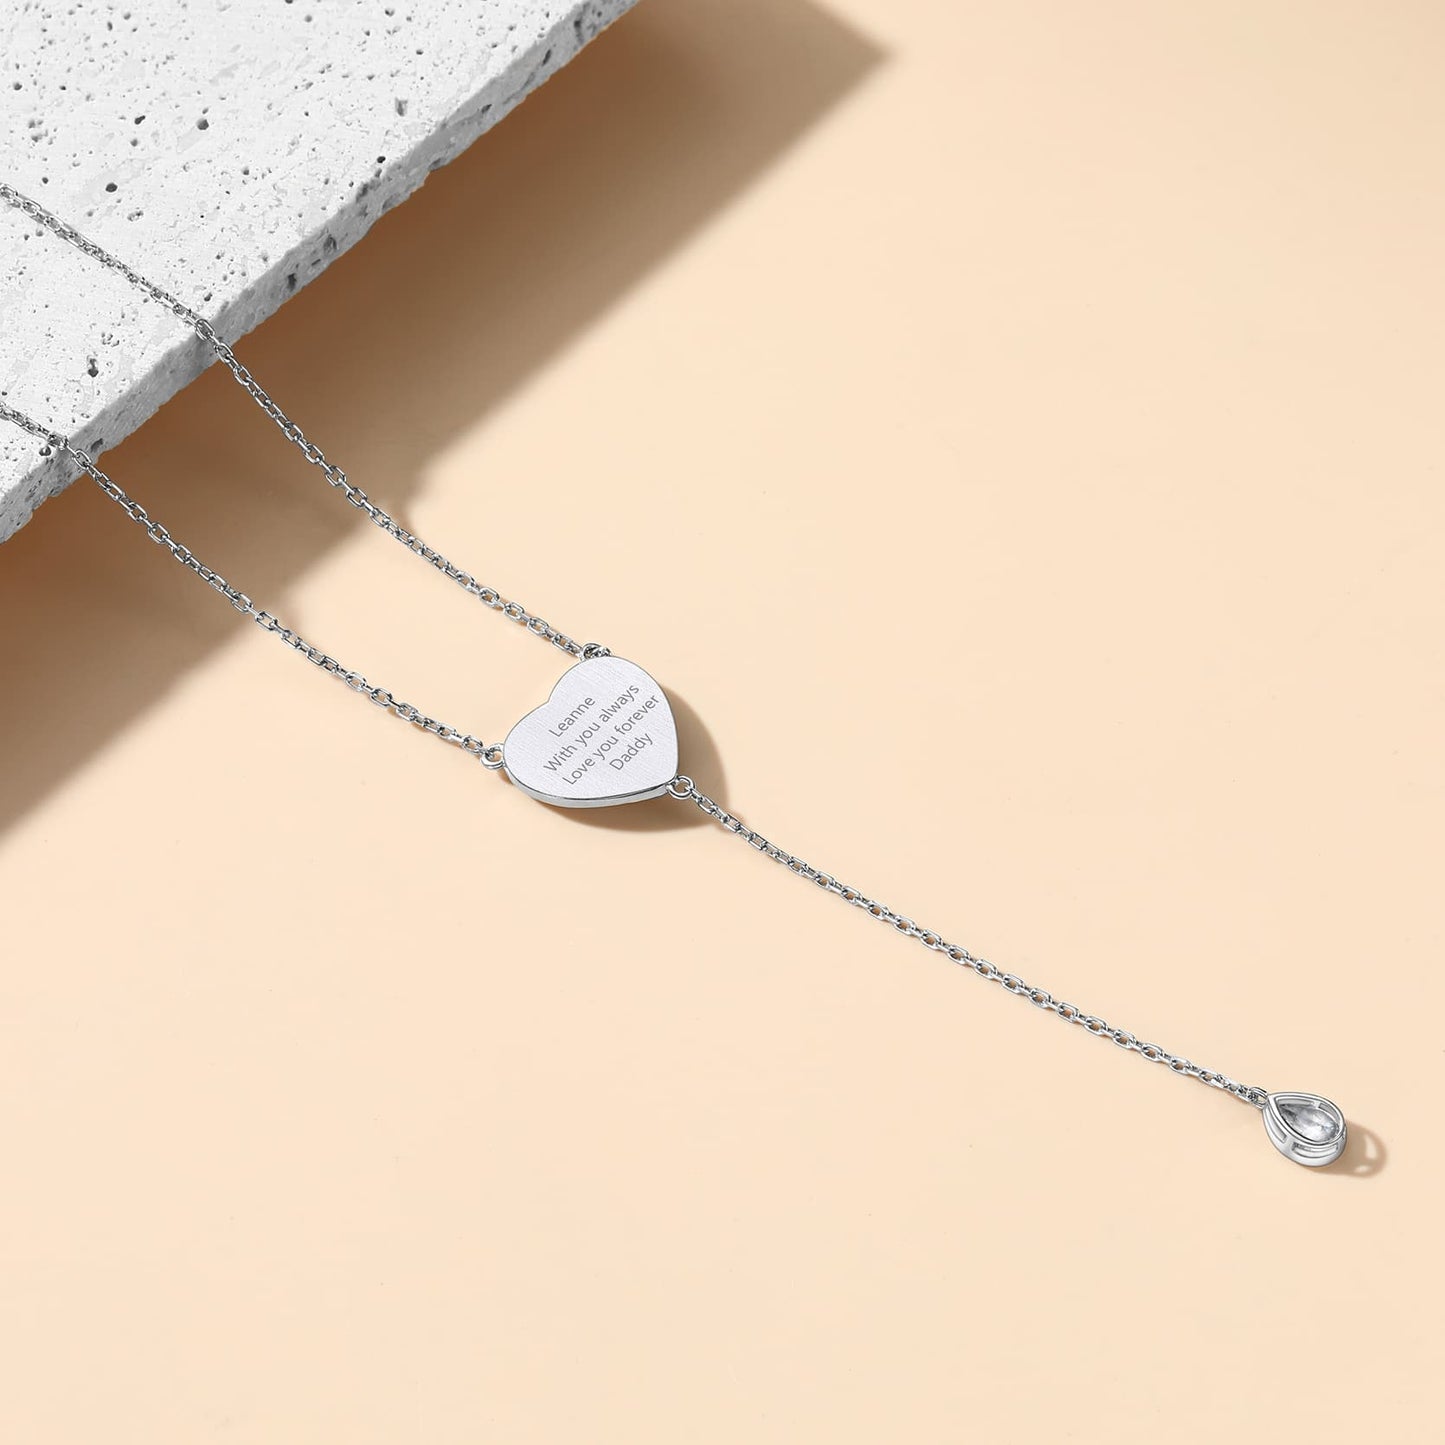 Birthstonesjewelry Sterling Silver Necklace